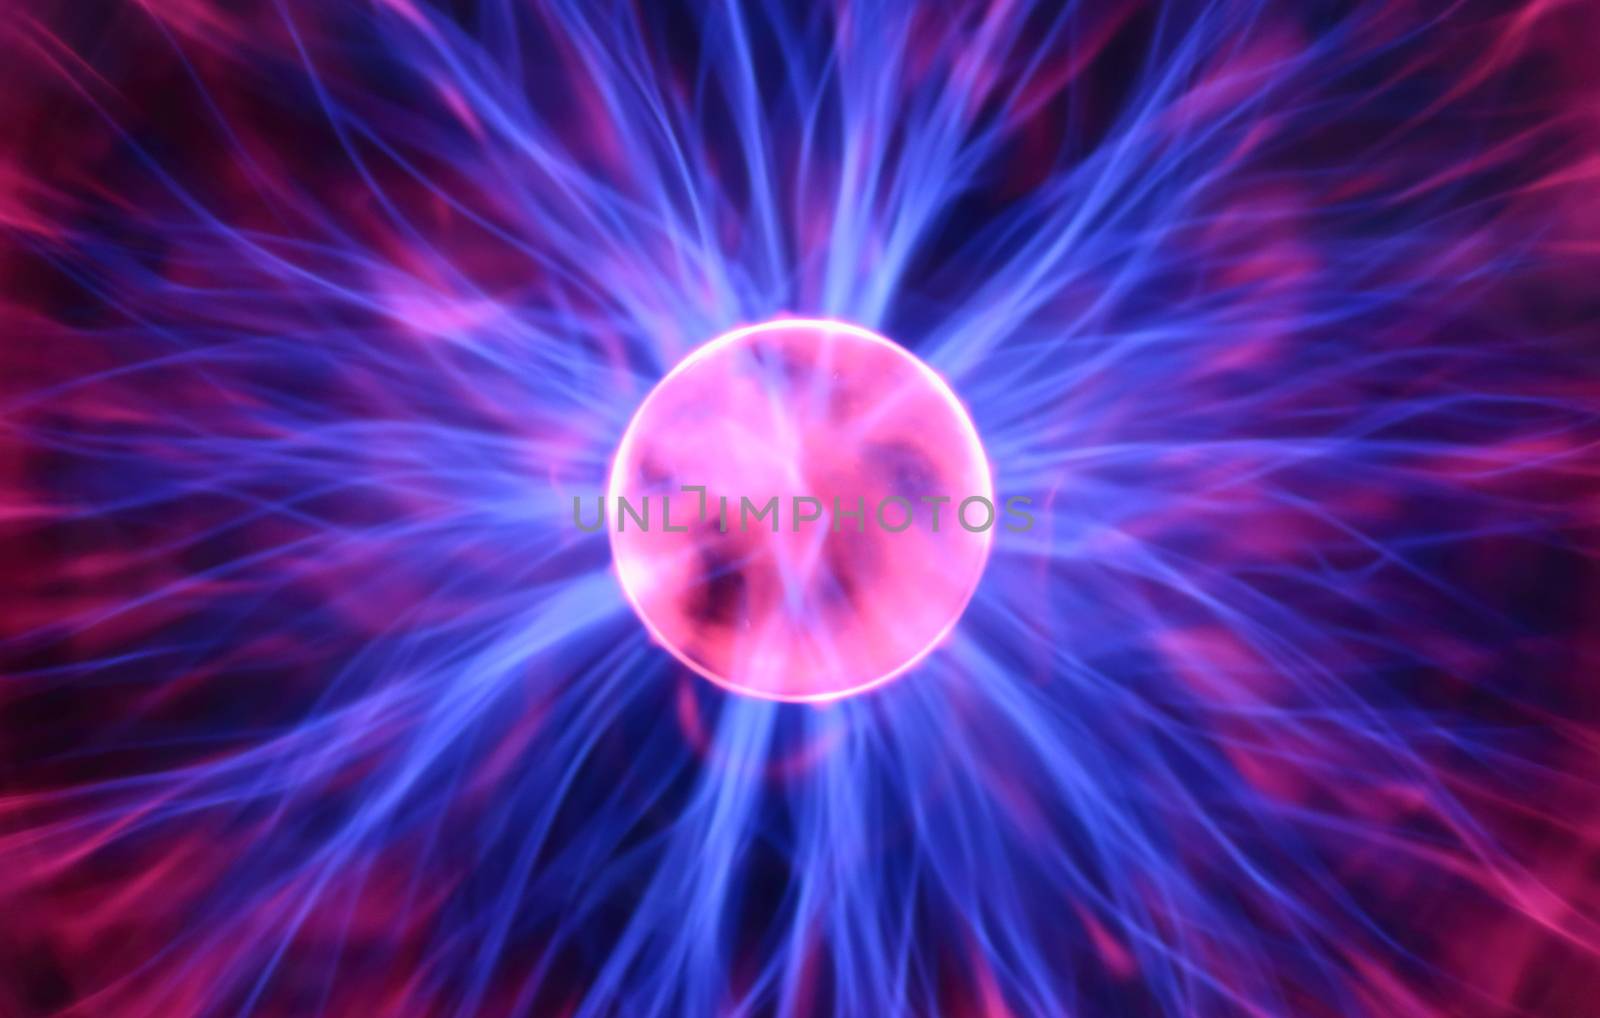 Plasma Sphere by robertboss